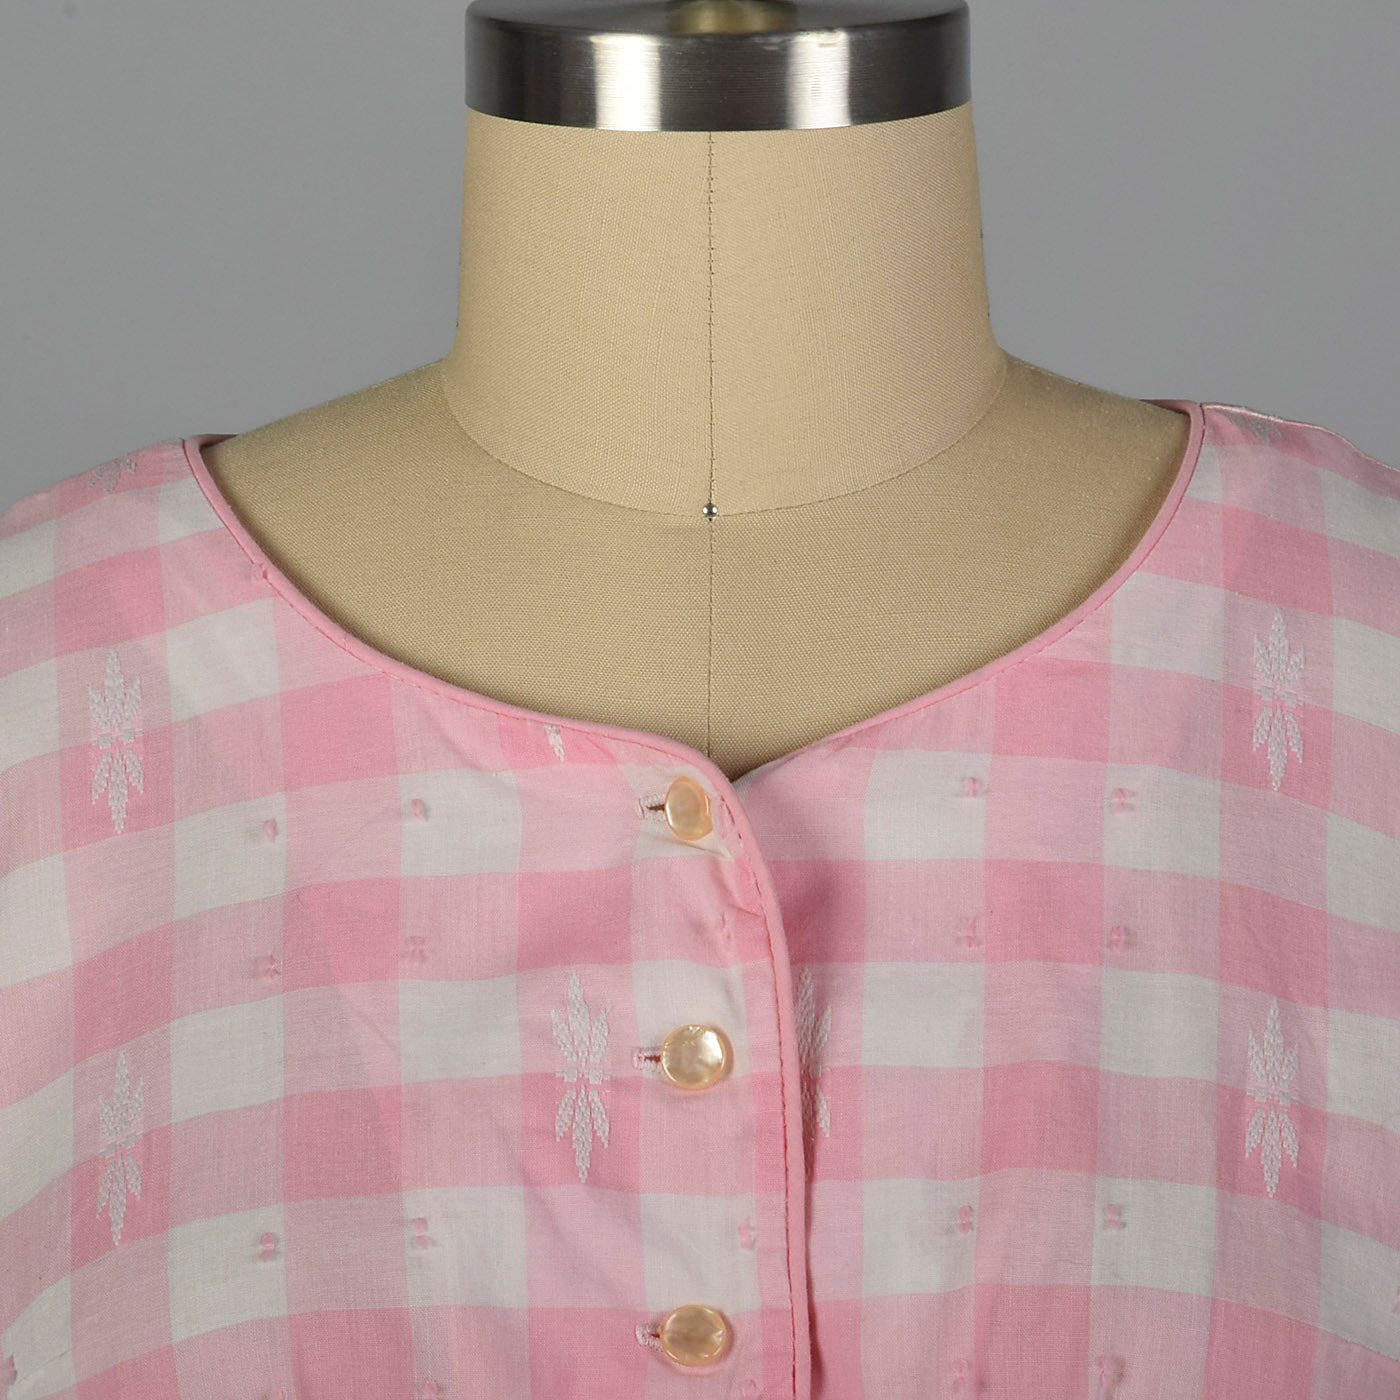 1950s Pink Gingham Pencil Dress